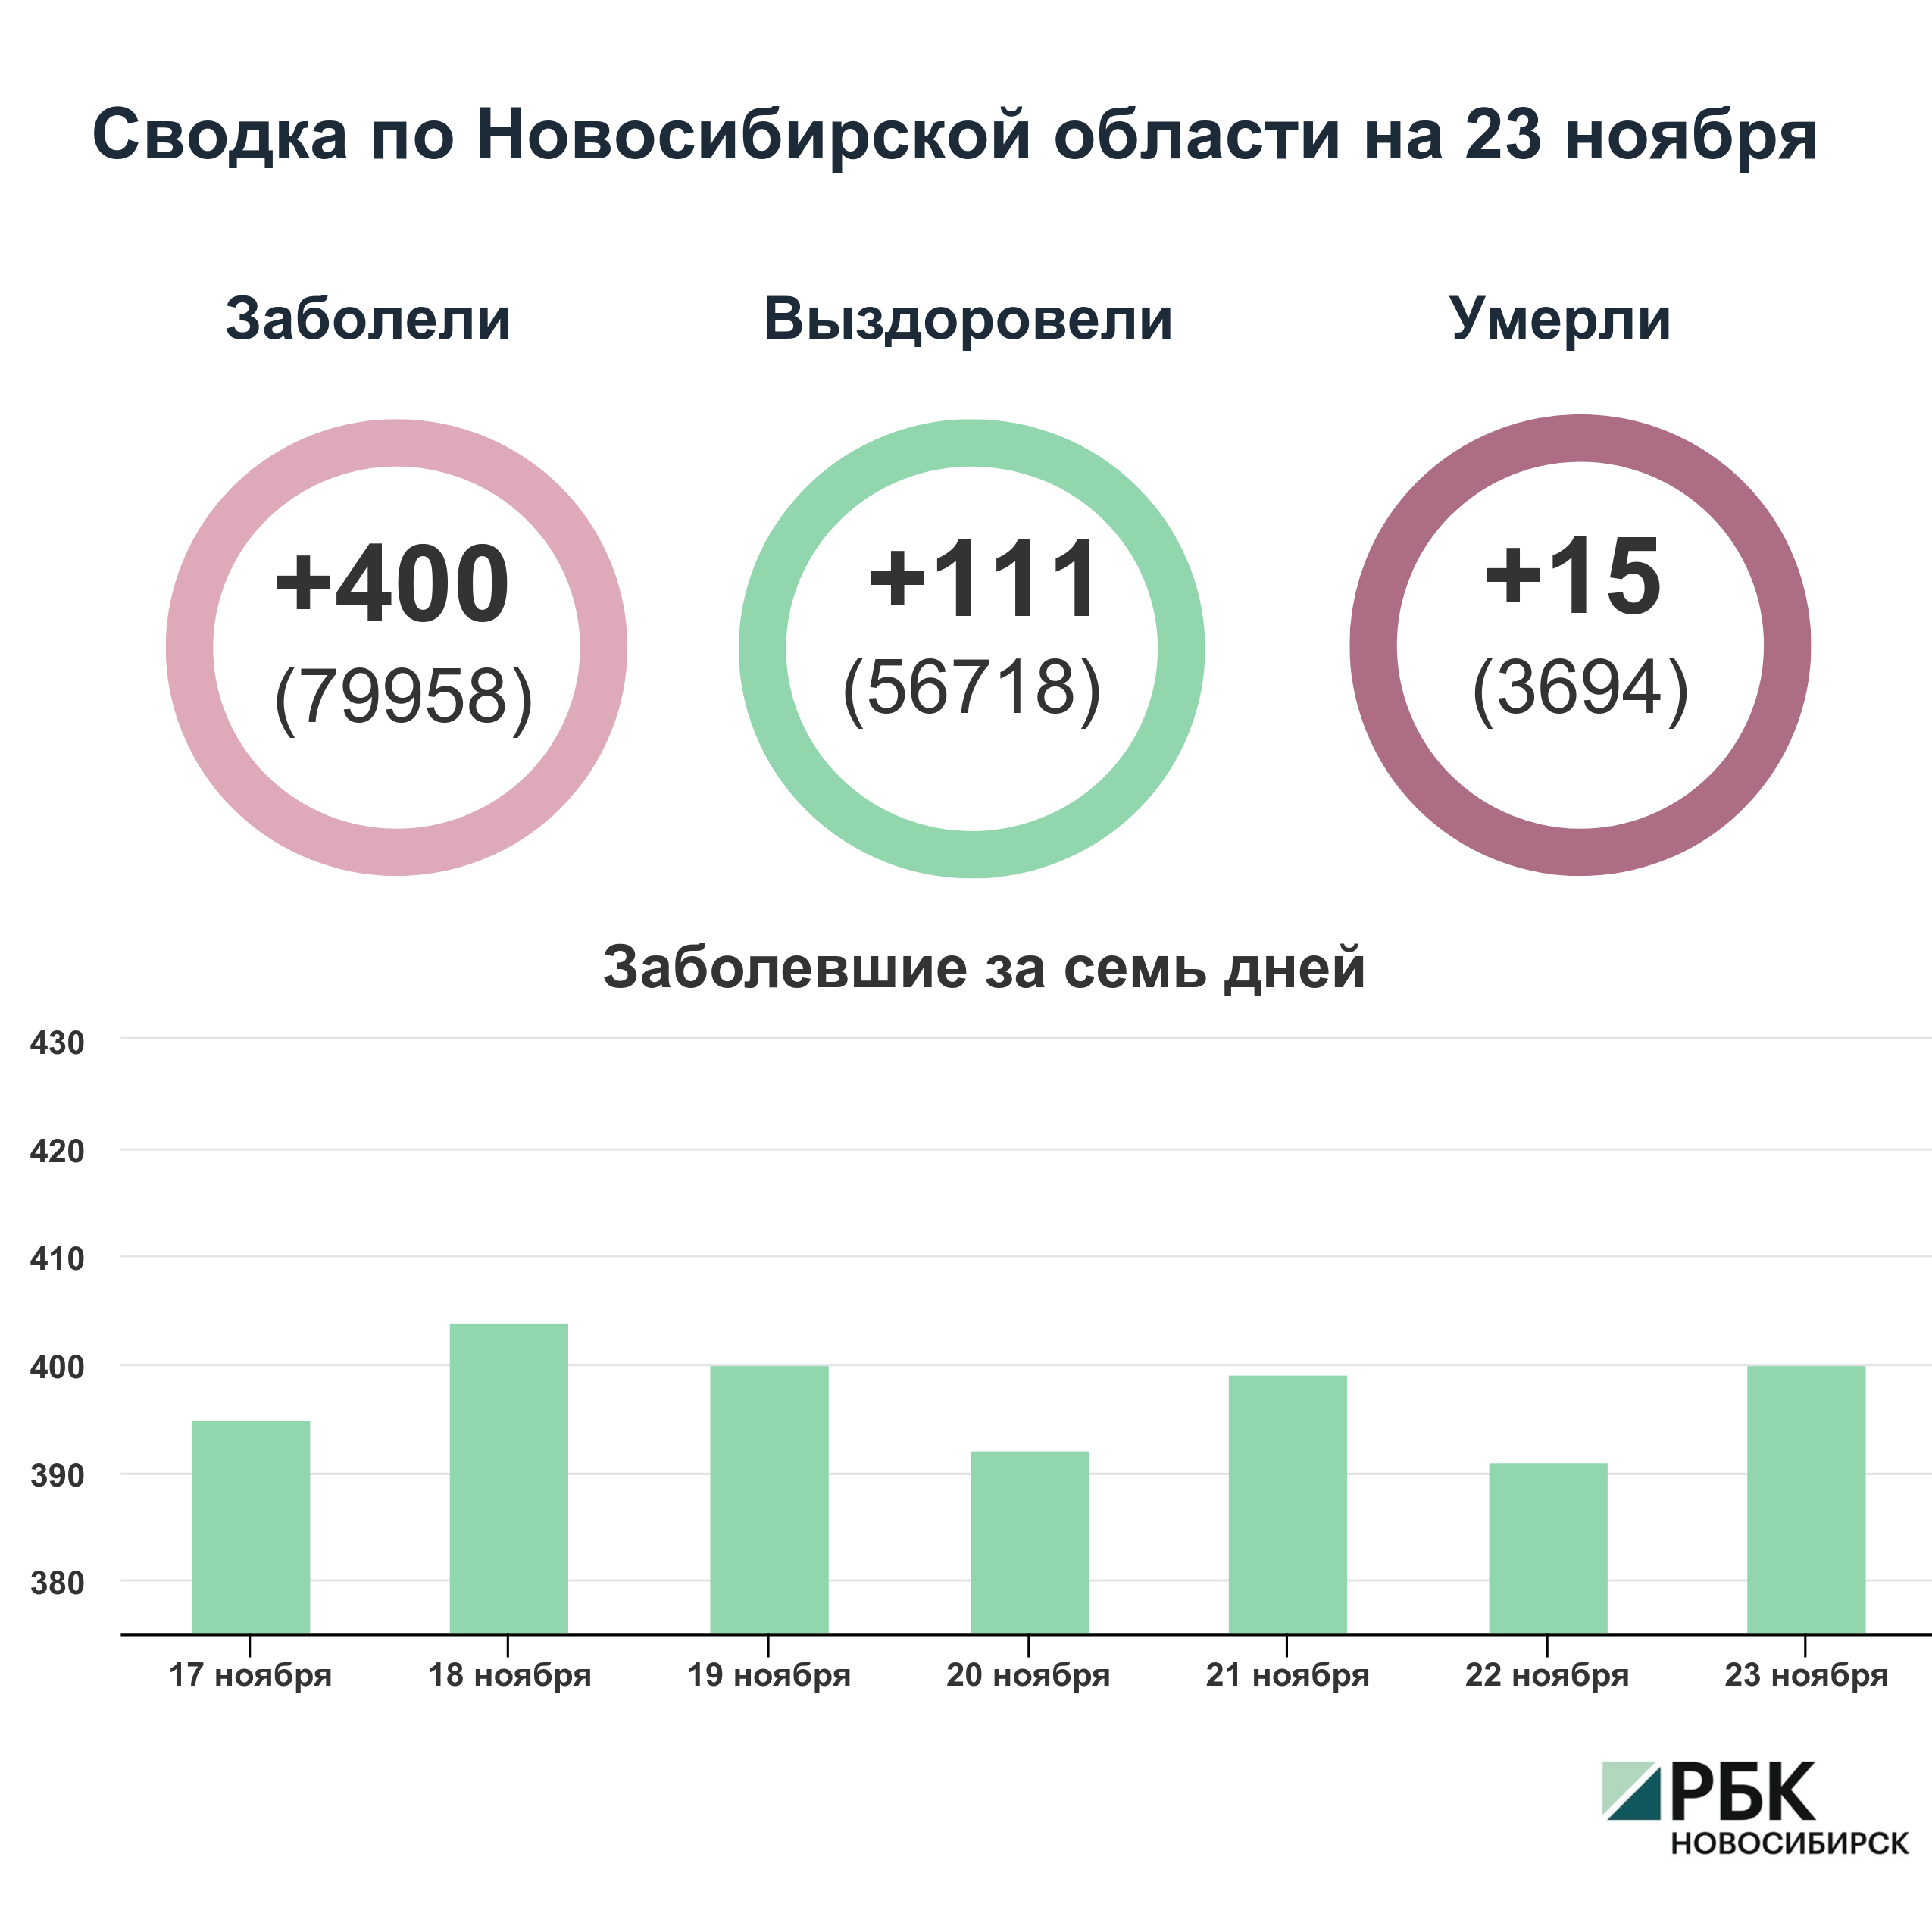 Коронавирус в Новосибирске: сводка на 23 ноября